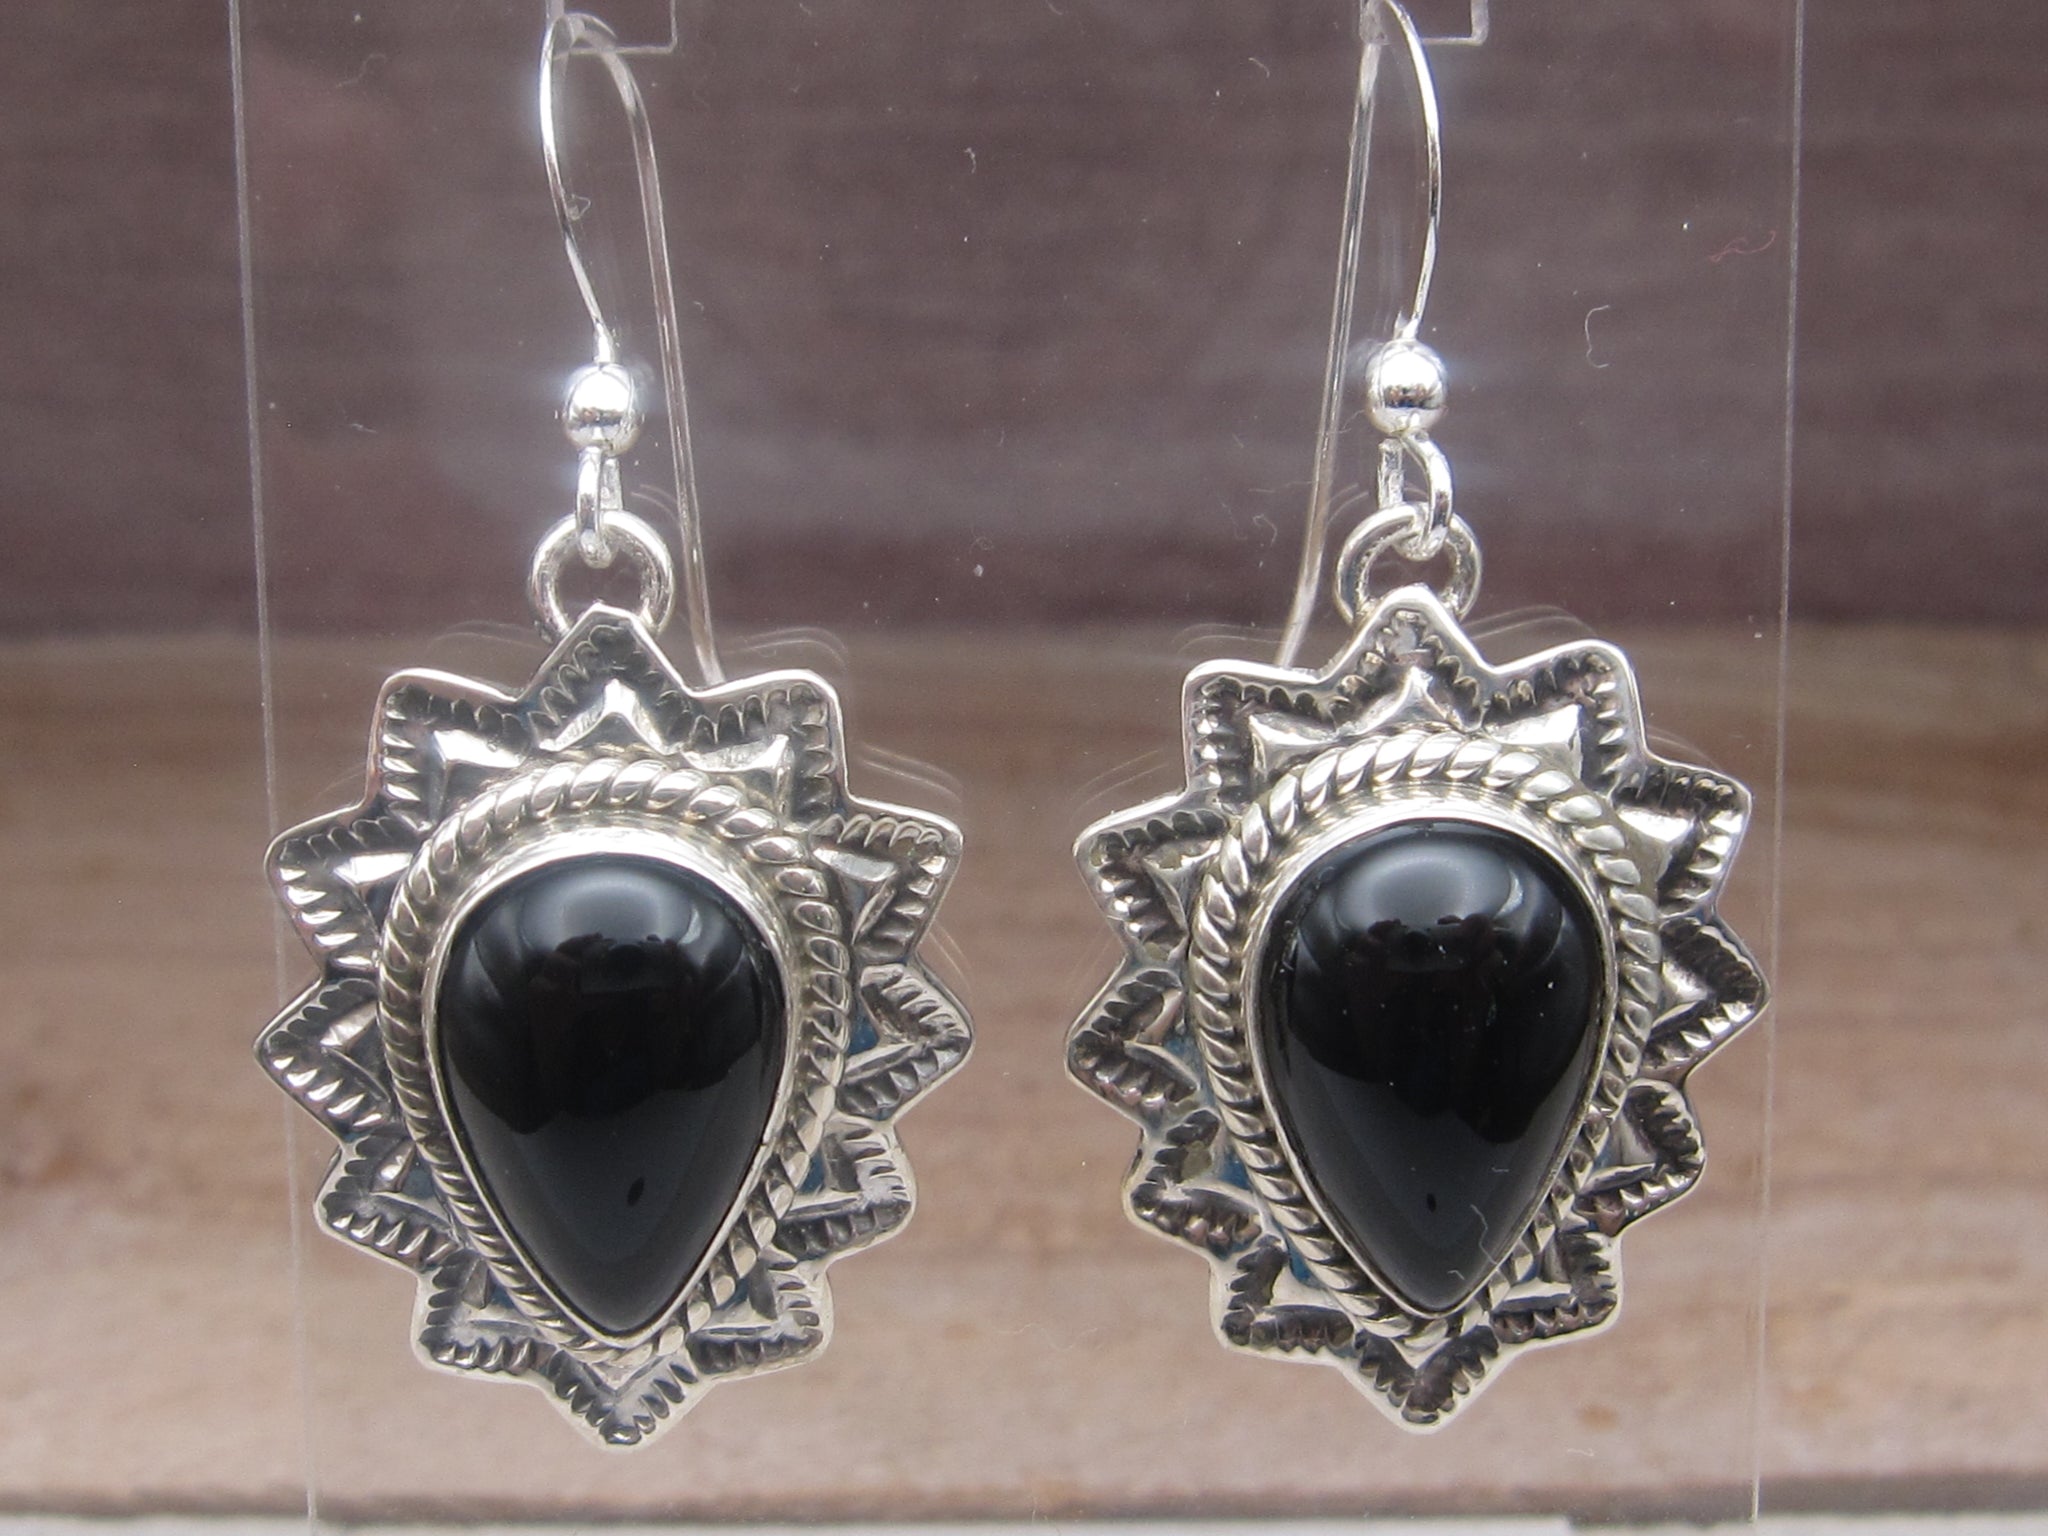 Buy Black Drop Earrings With Silver Stones Online - W for Woman